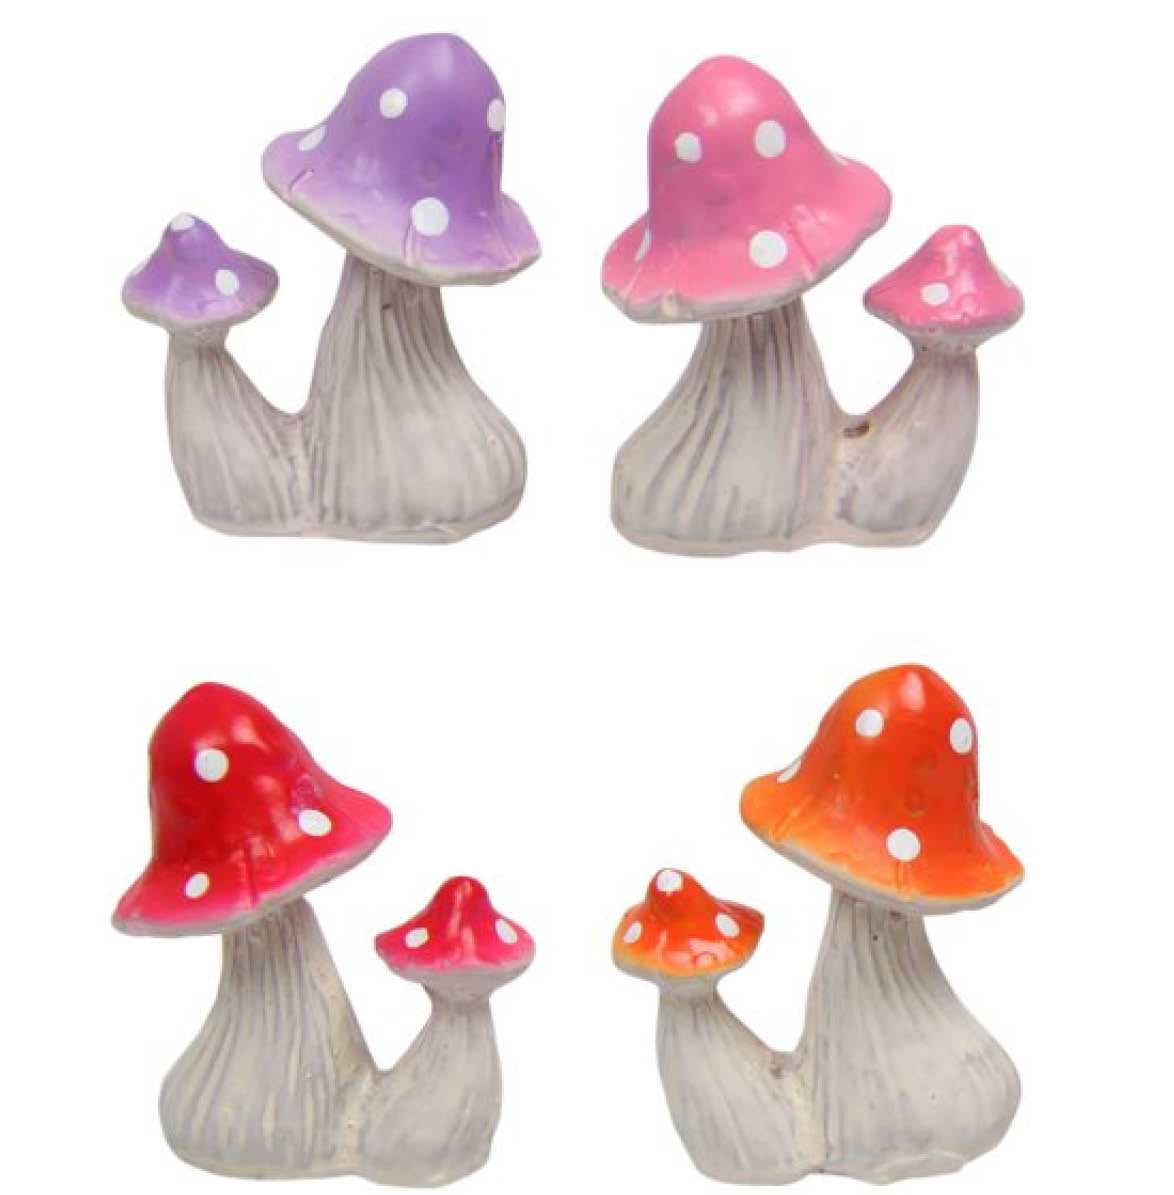 Fairy House Accessories - Mushrooms & Toadstools